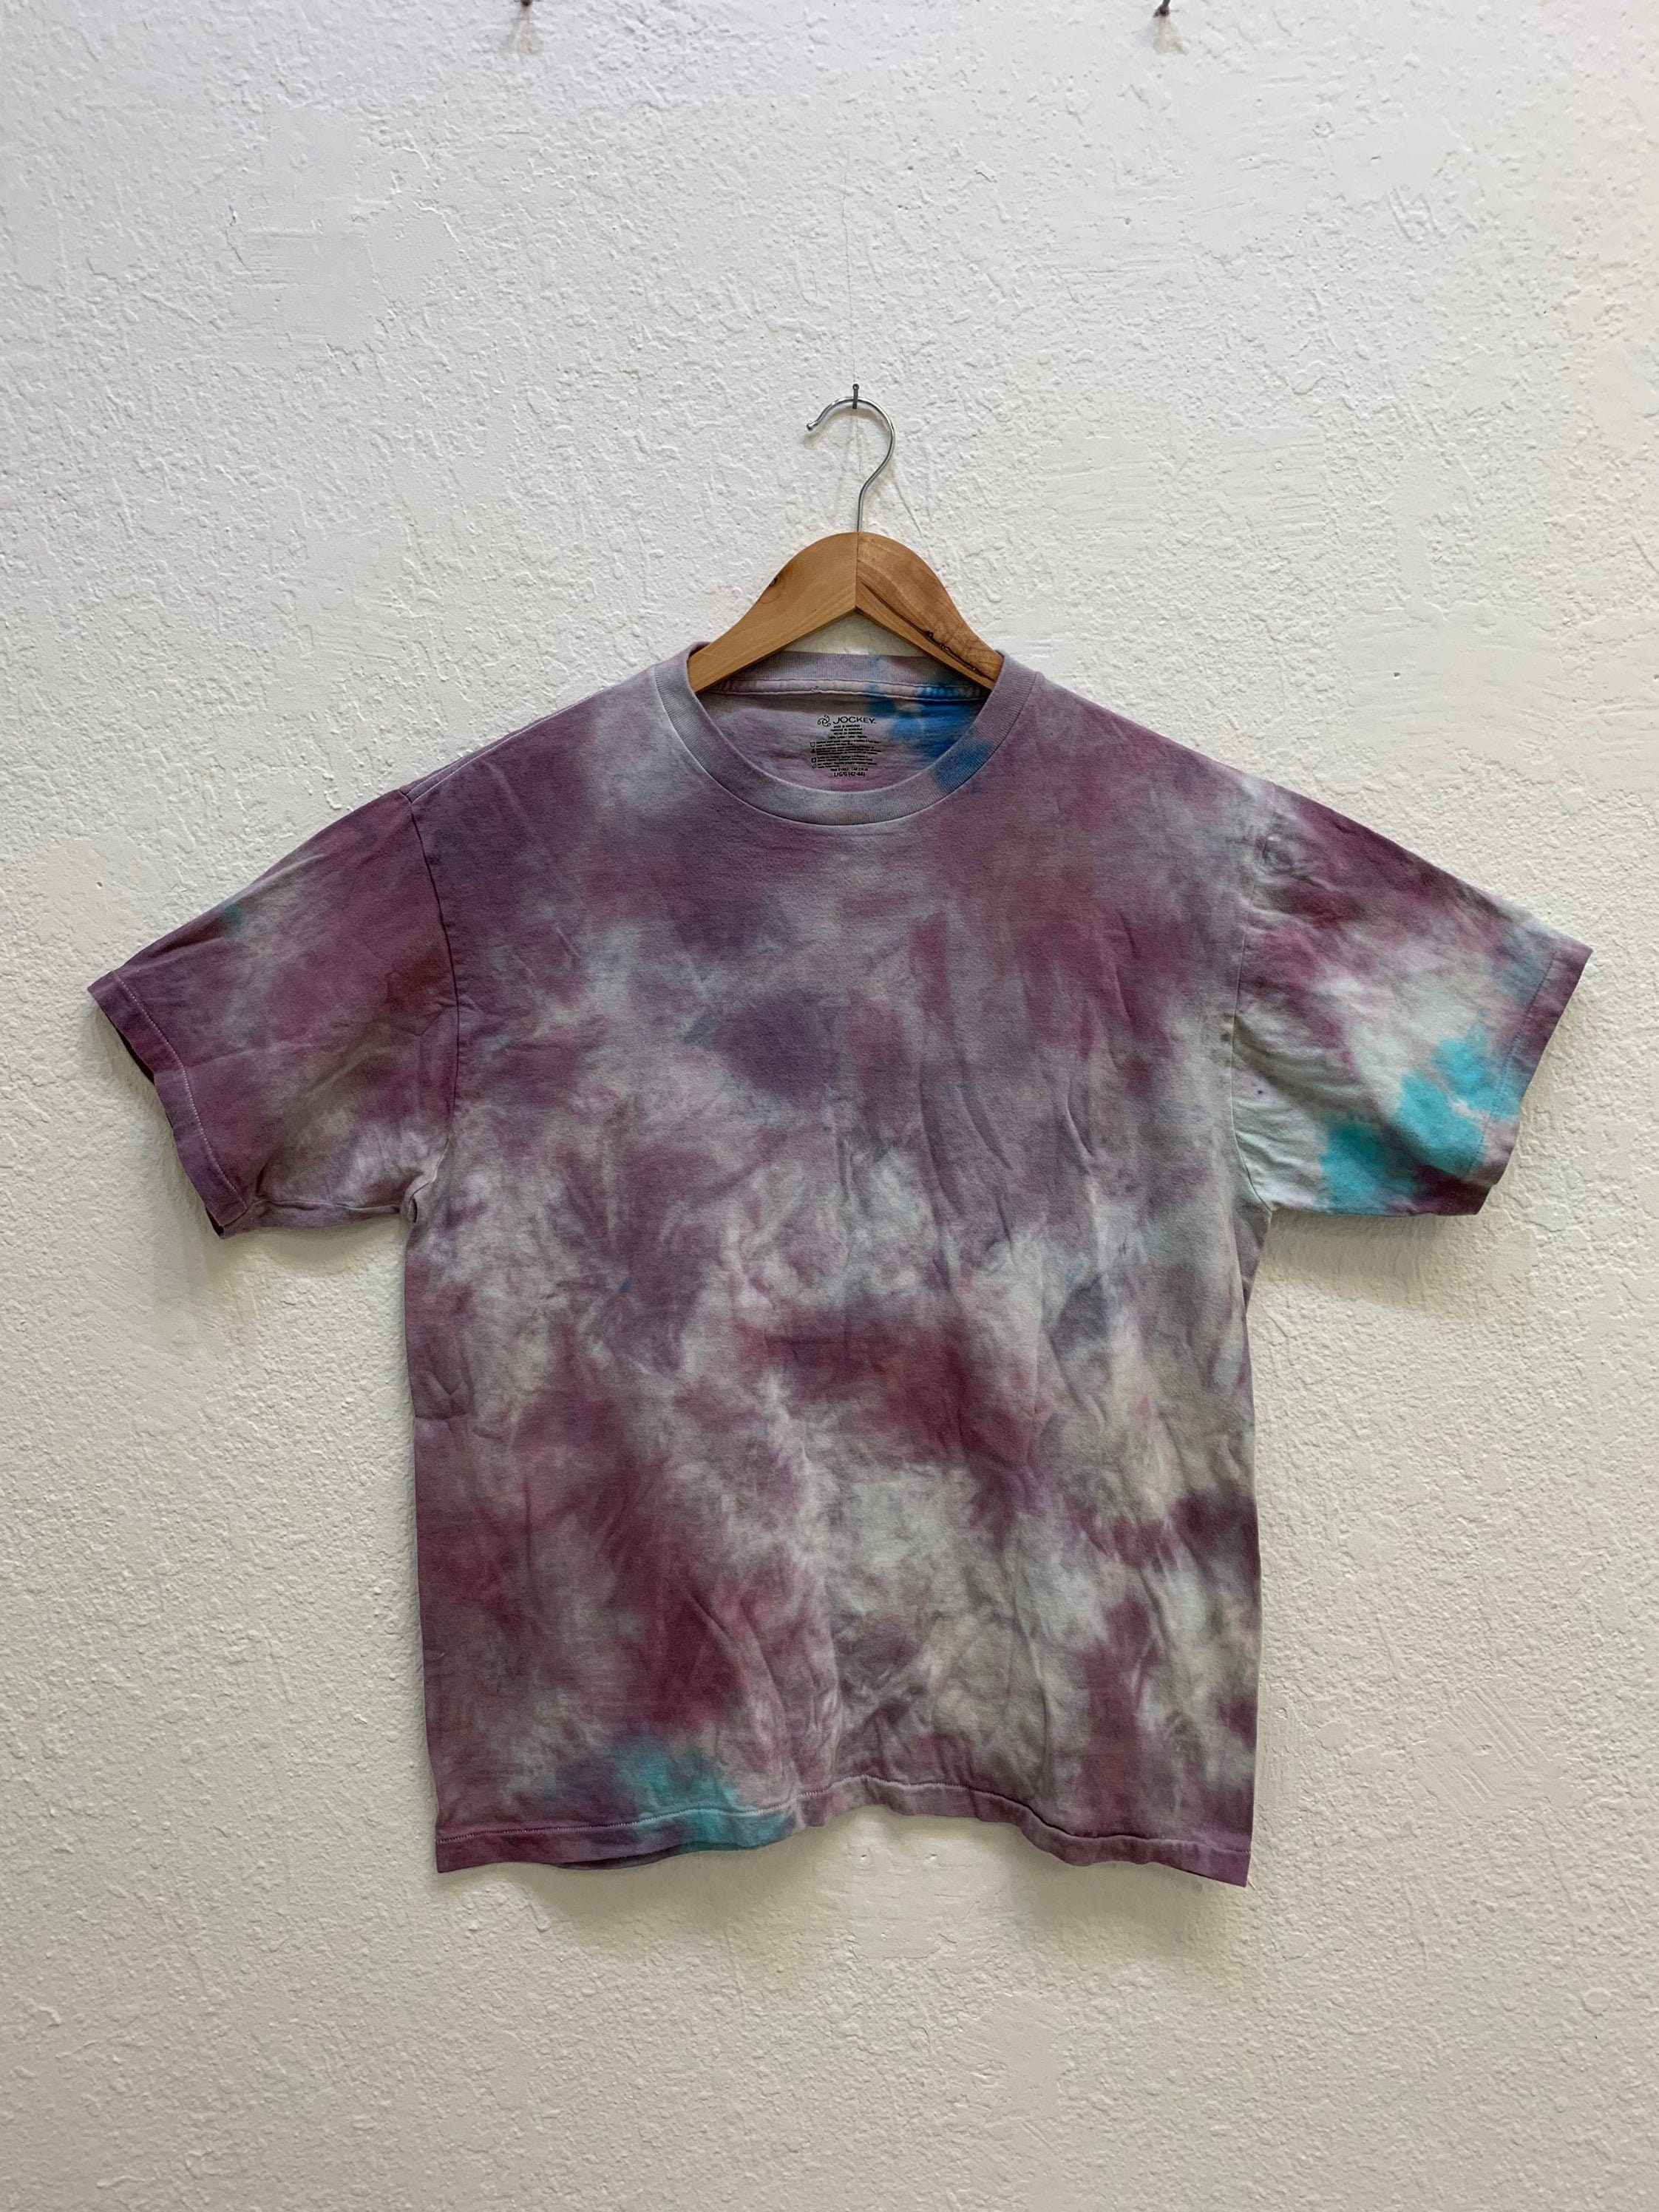 Unisex large purple tie-dye t-shirt | Etsy